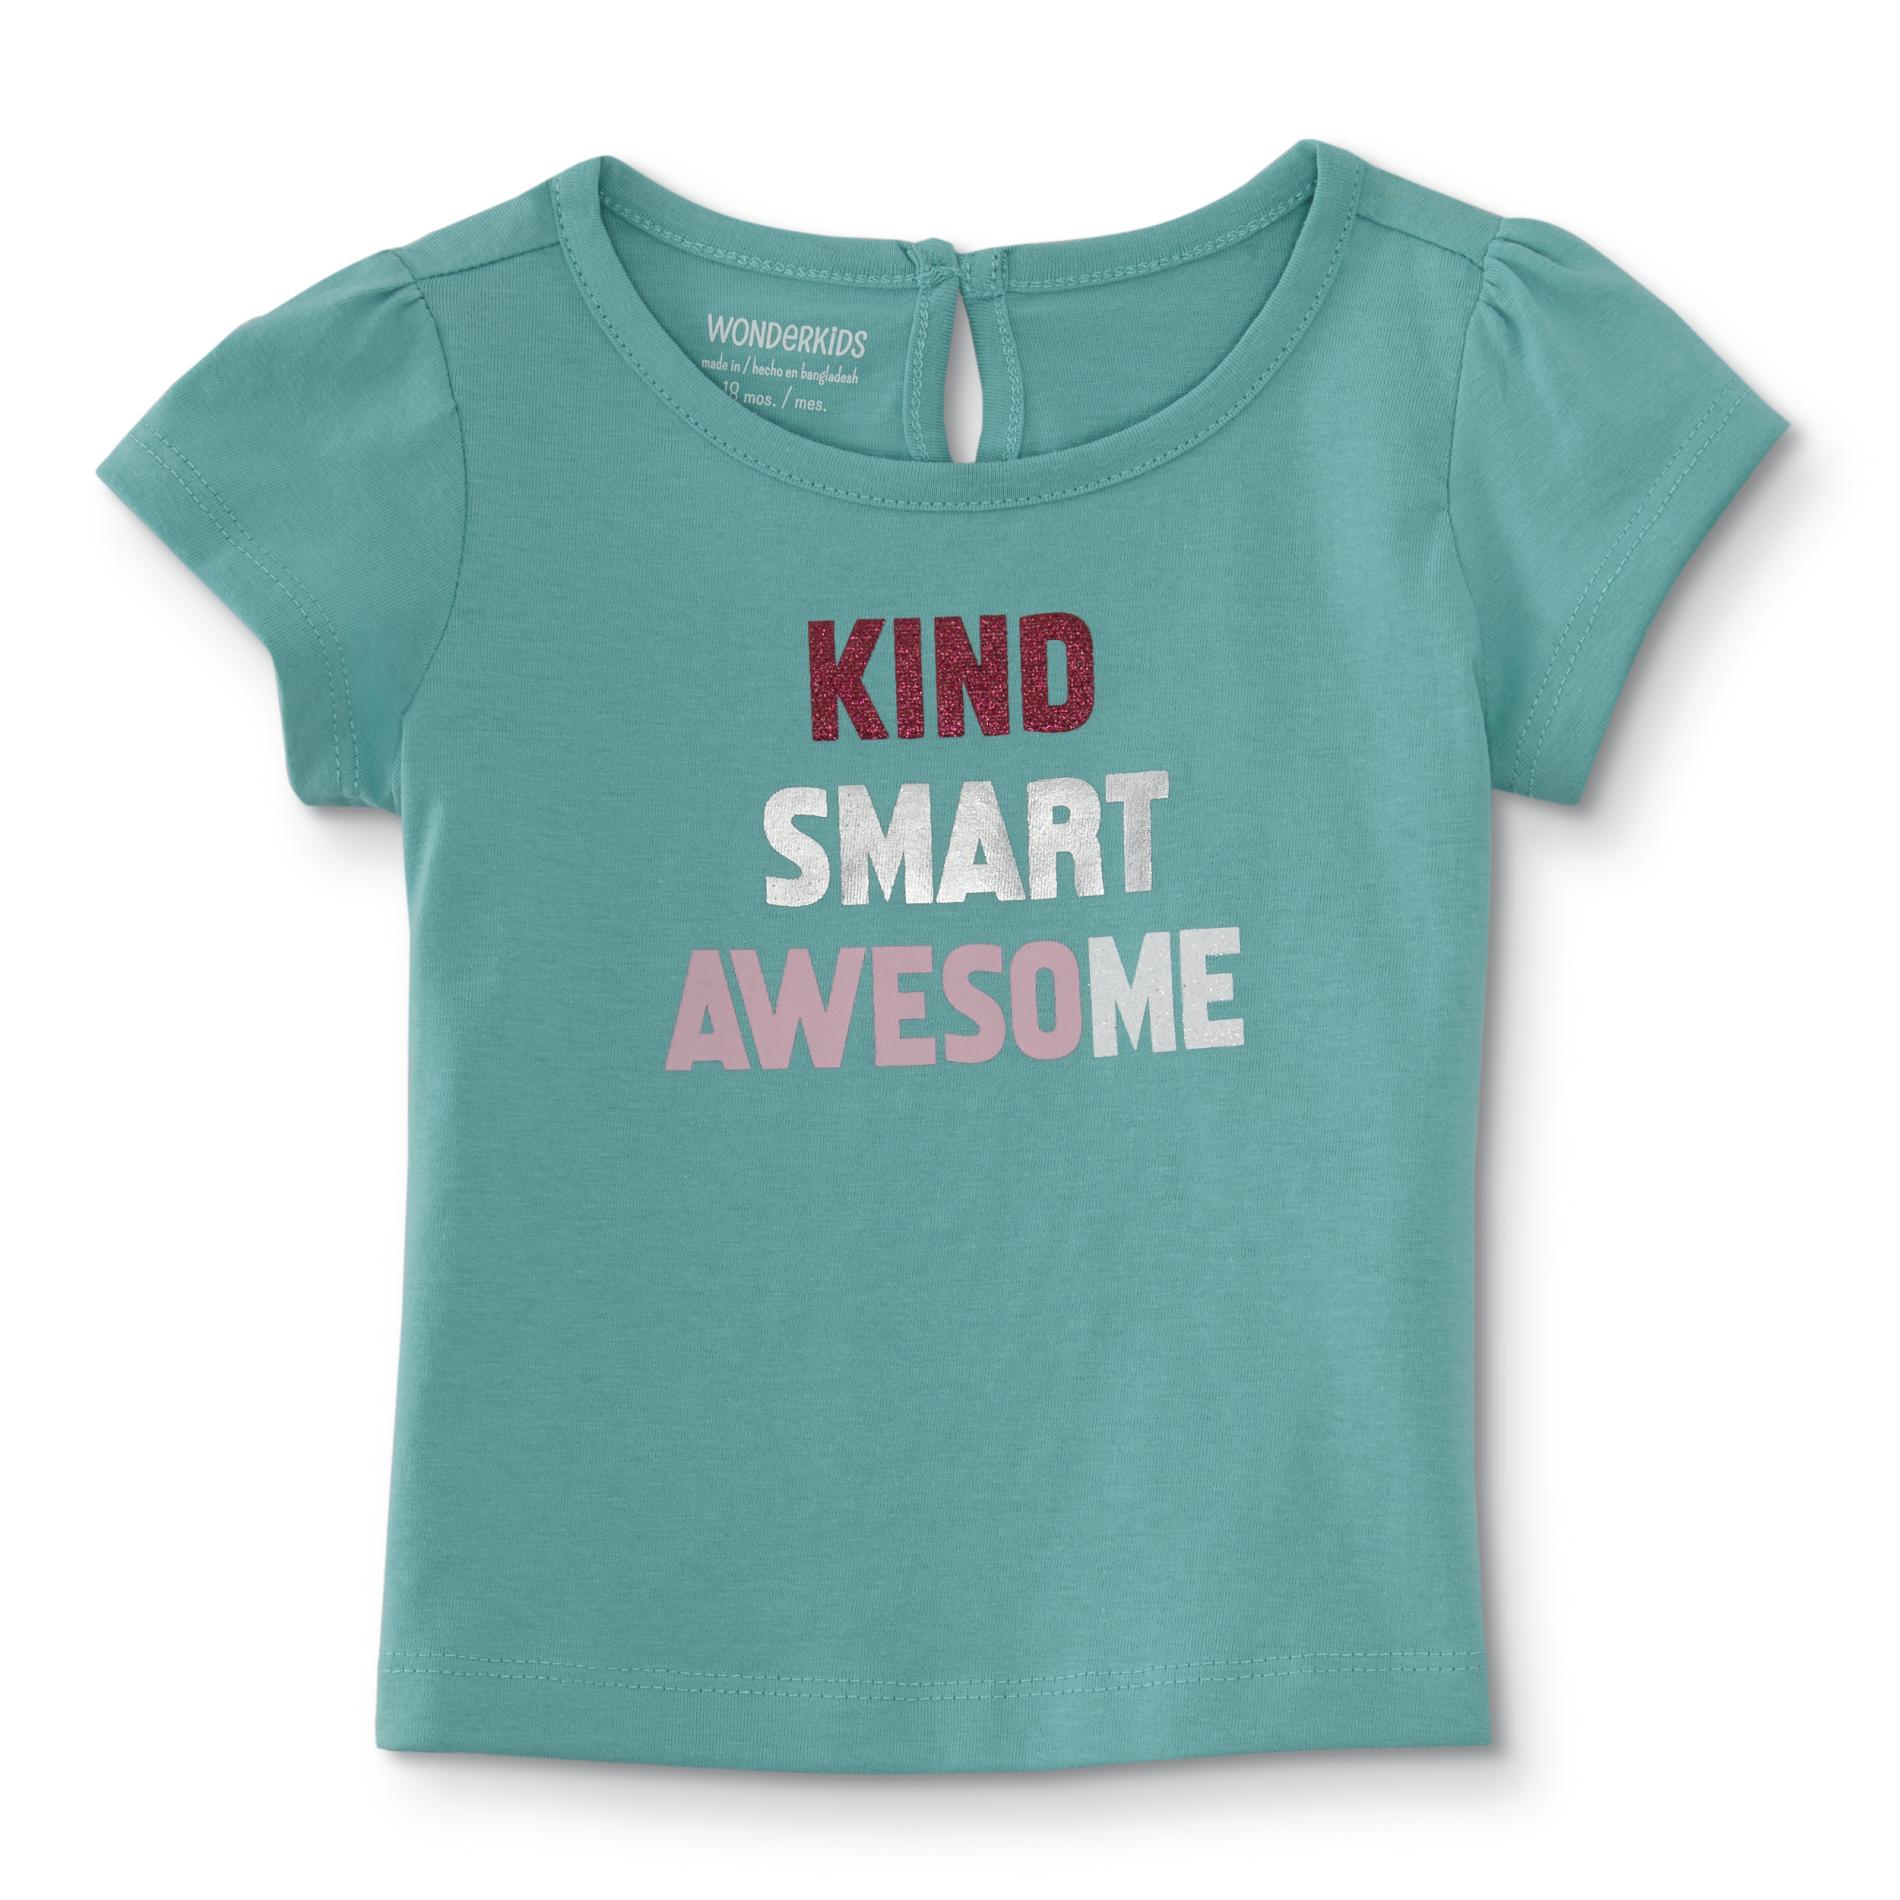 WonderKids Infant & Toddler Girls' Graphic T-Shirt - Kind Smart Awesome